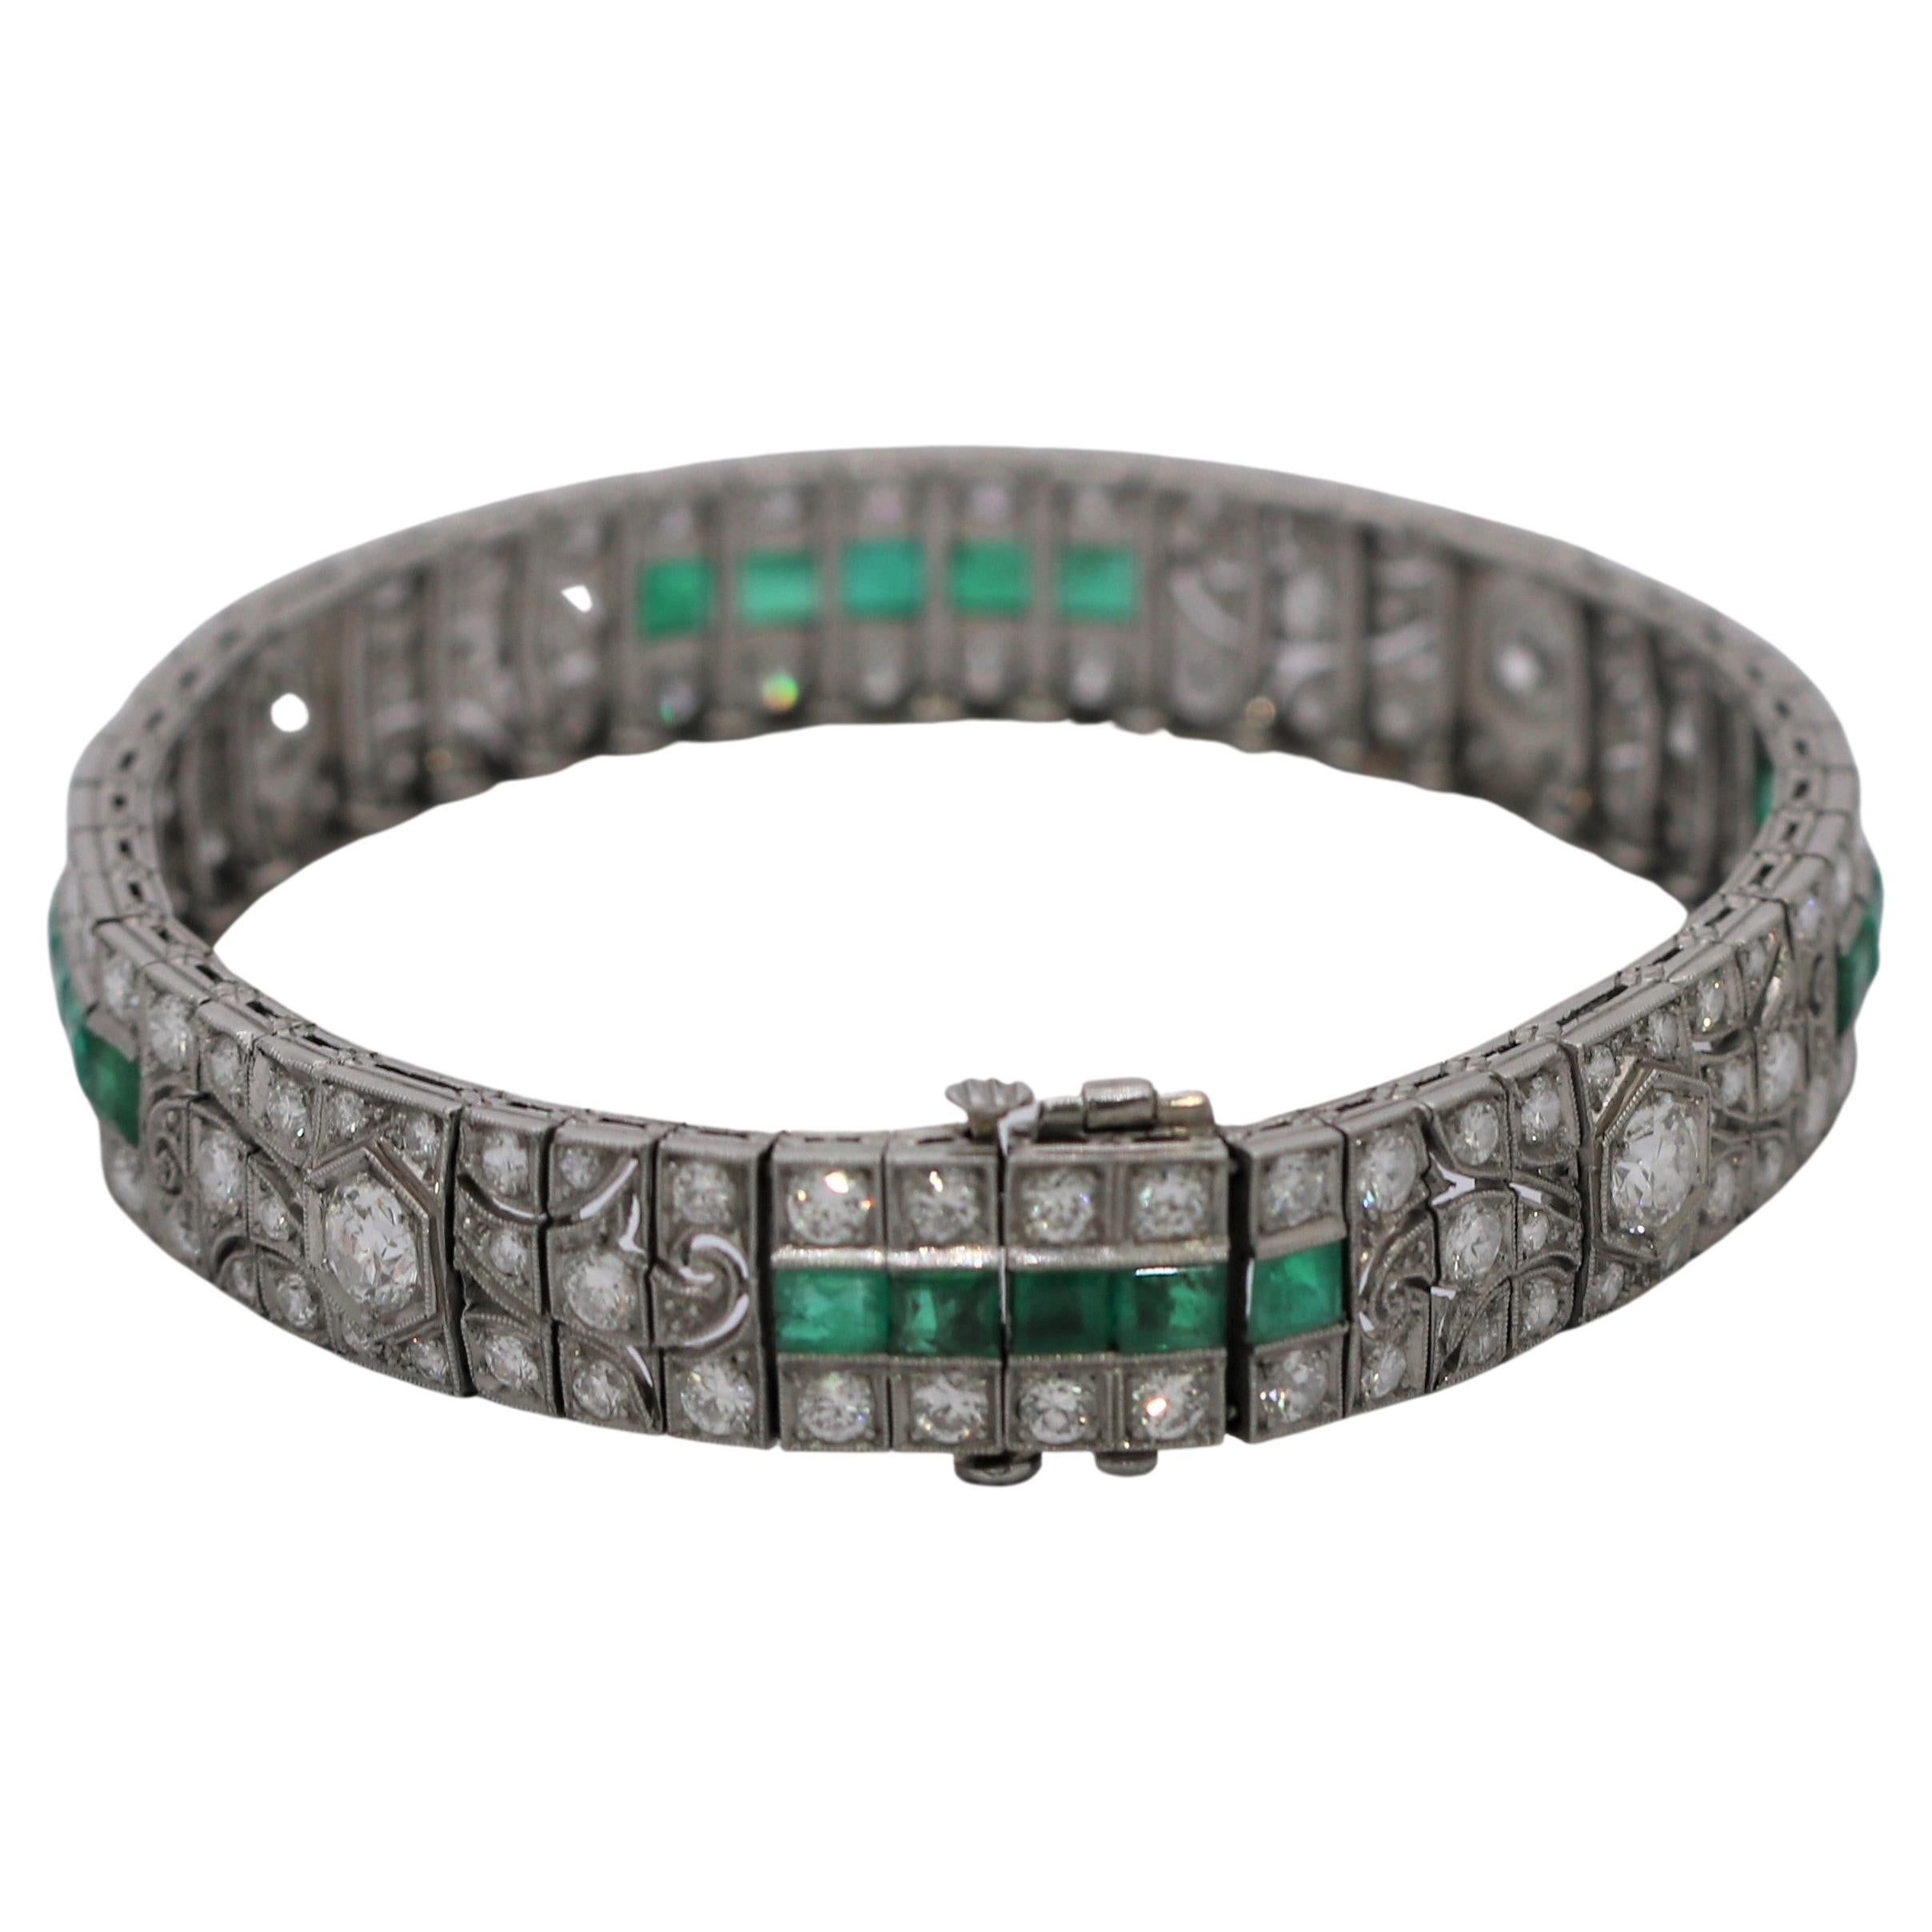 Impeccable Art Deco Diamond and Emerald Bracelet 14